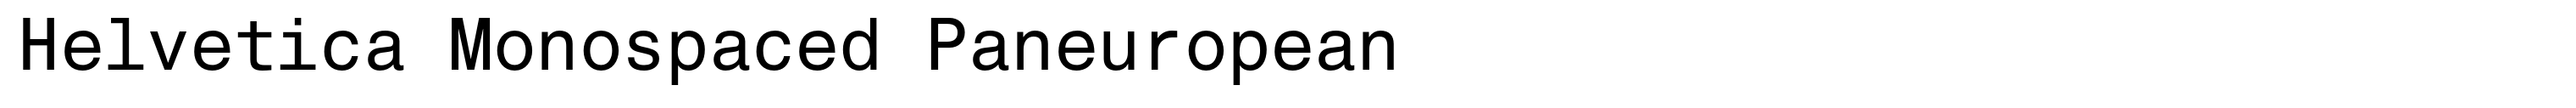 Helvetica Monospaced Paneuropean